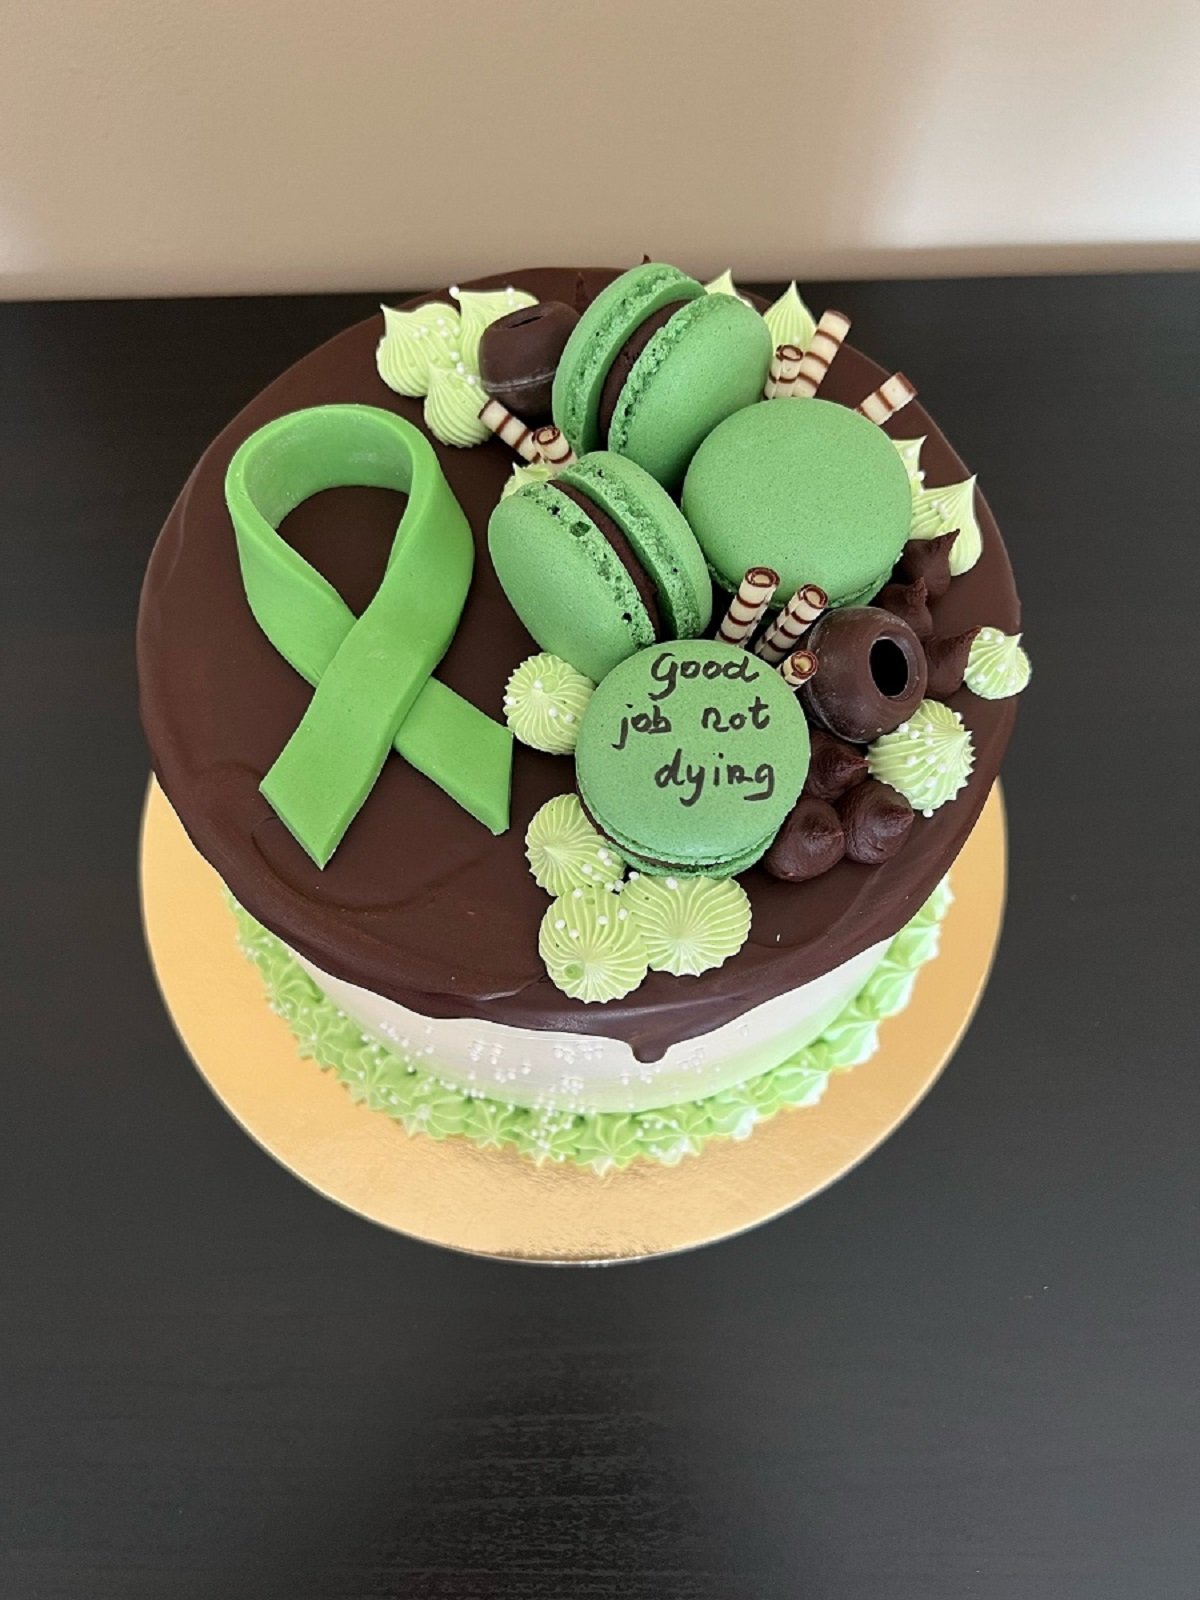 Cake given to cancer survivor in remission